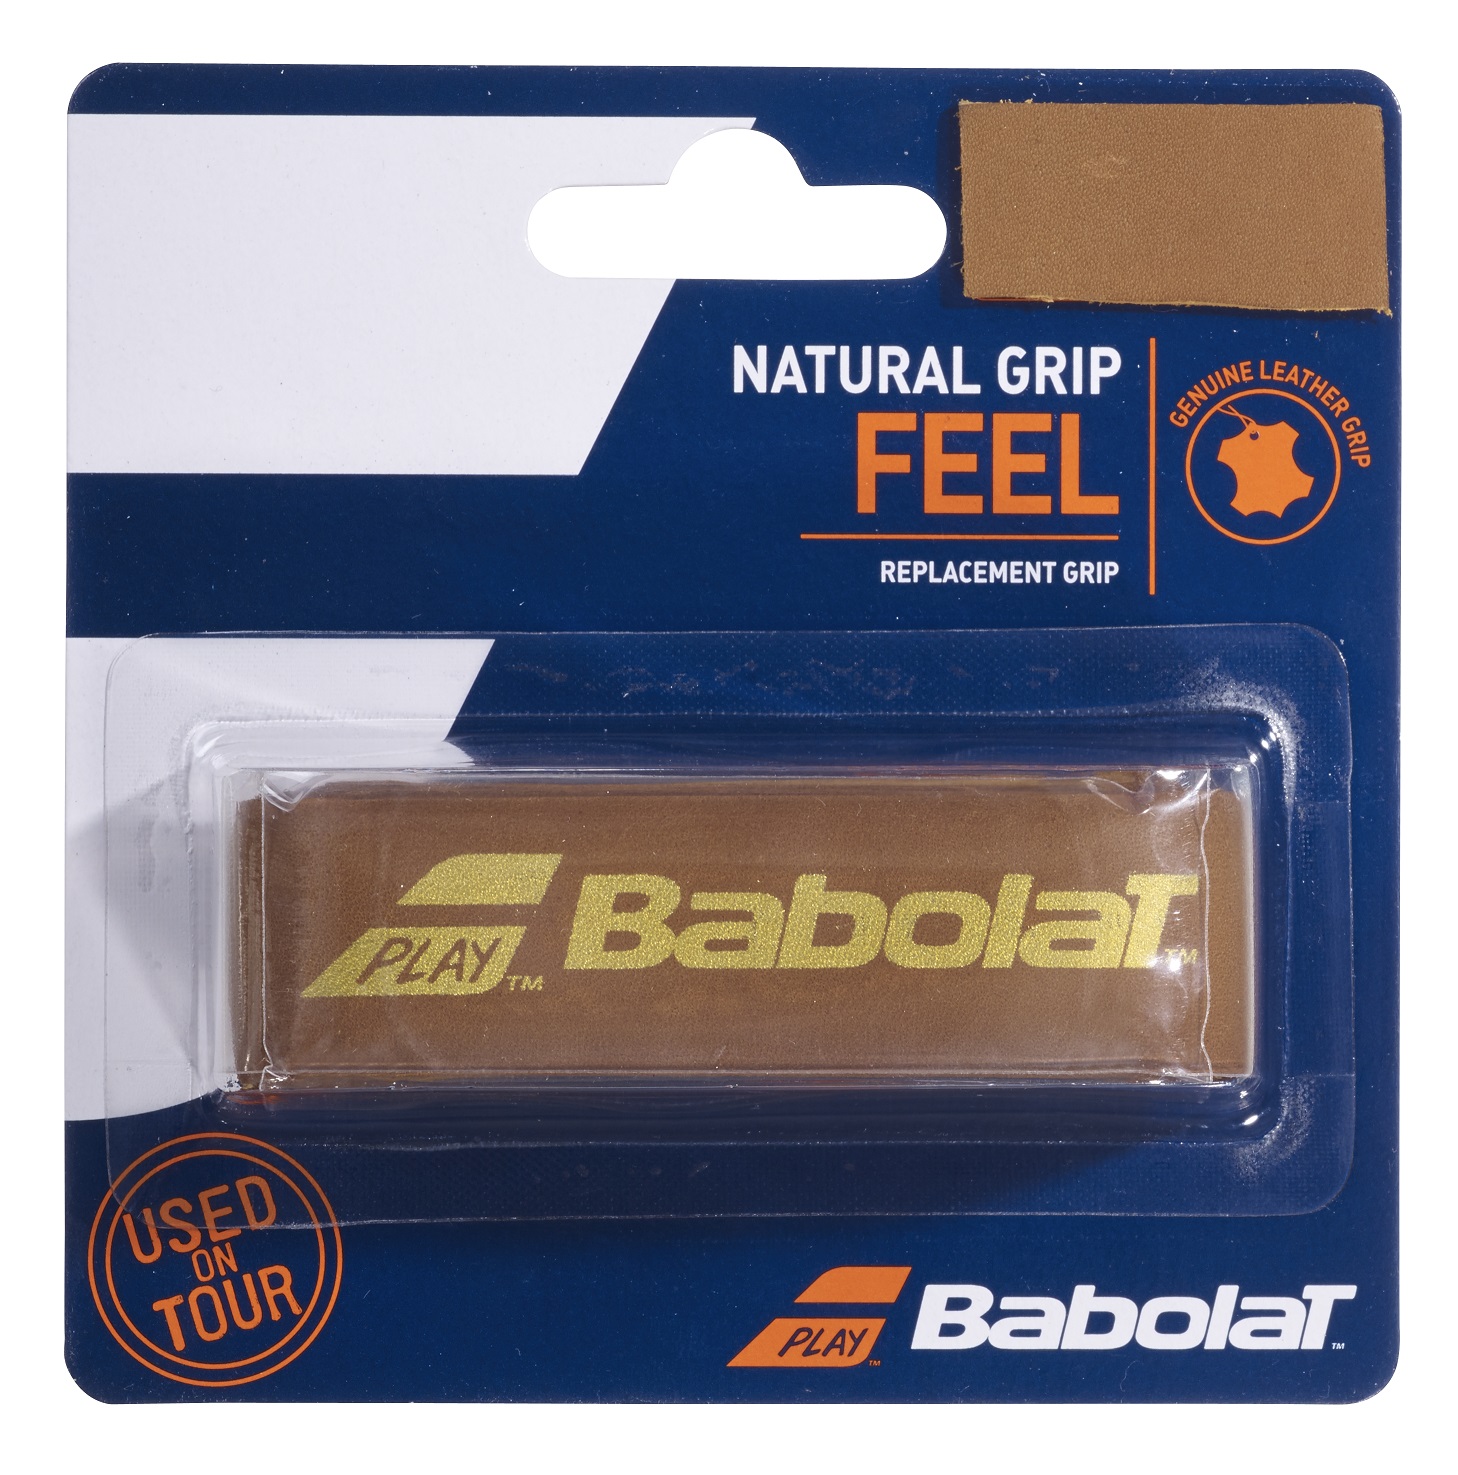 גריפ (עורית) בבולט Natural Grip Babolat